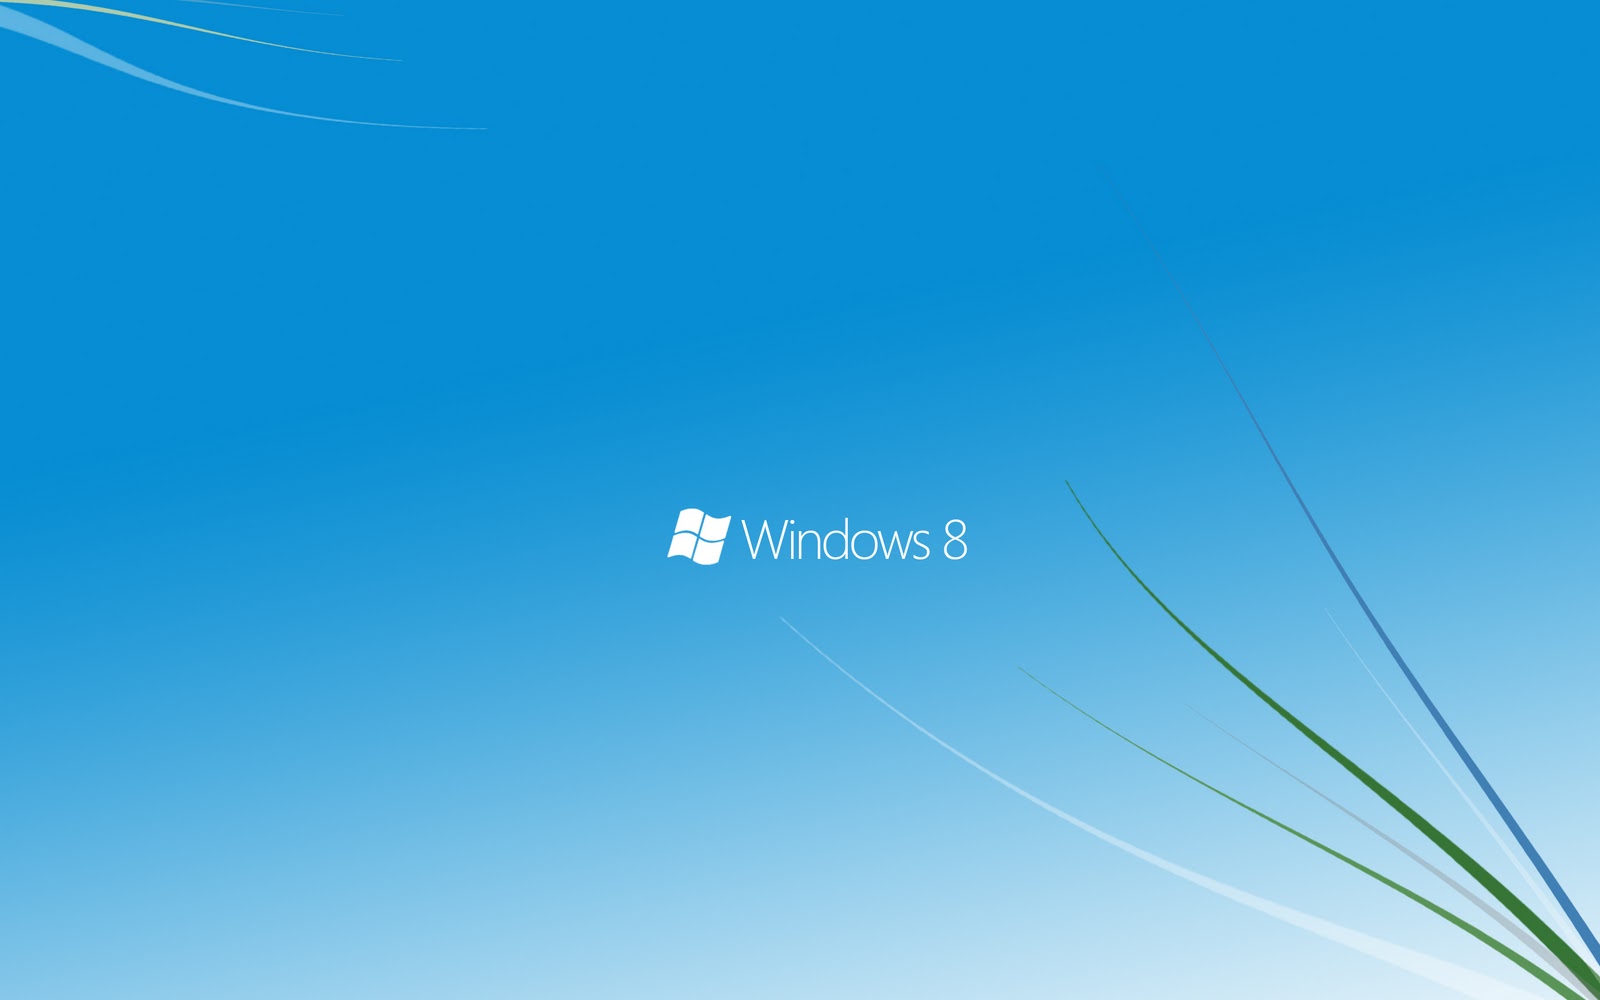 Windows8 Start Screen Wallpaper Picswallpaper